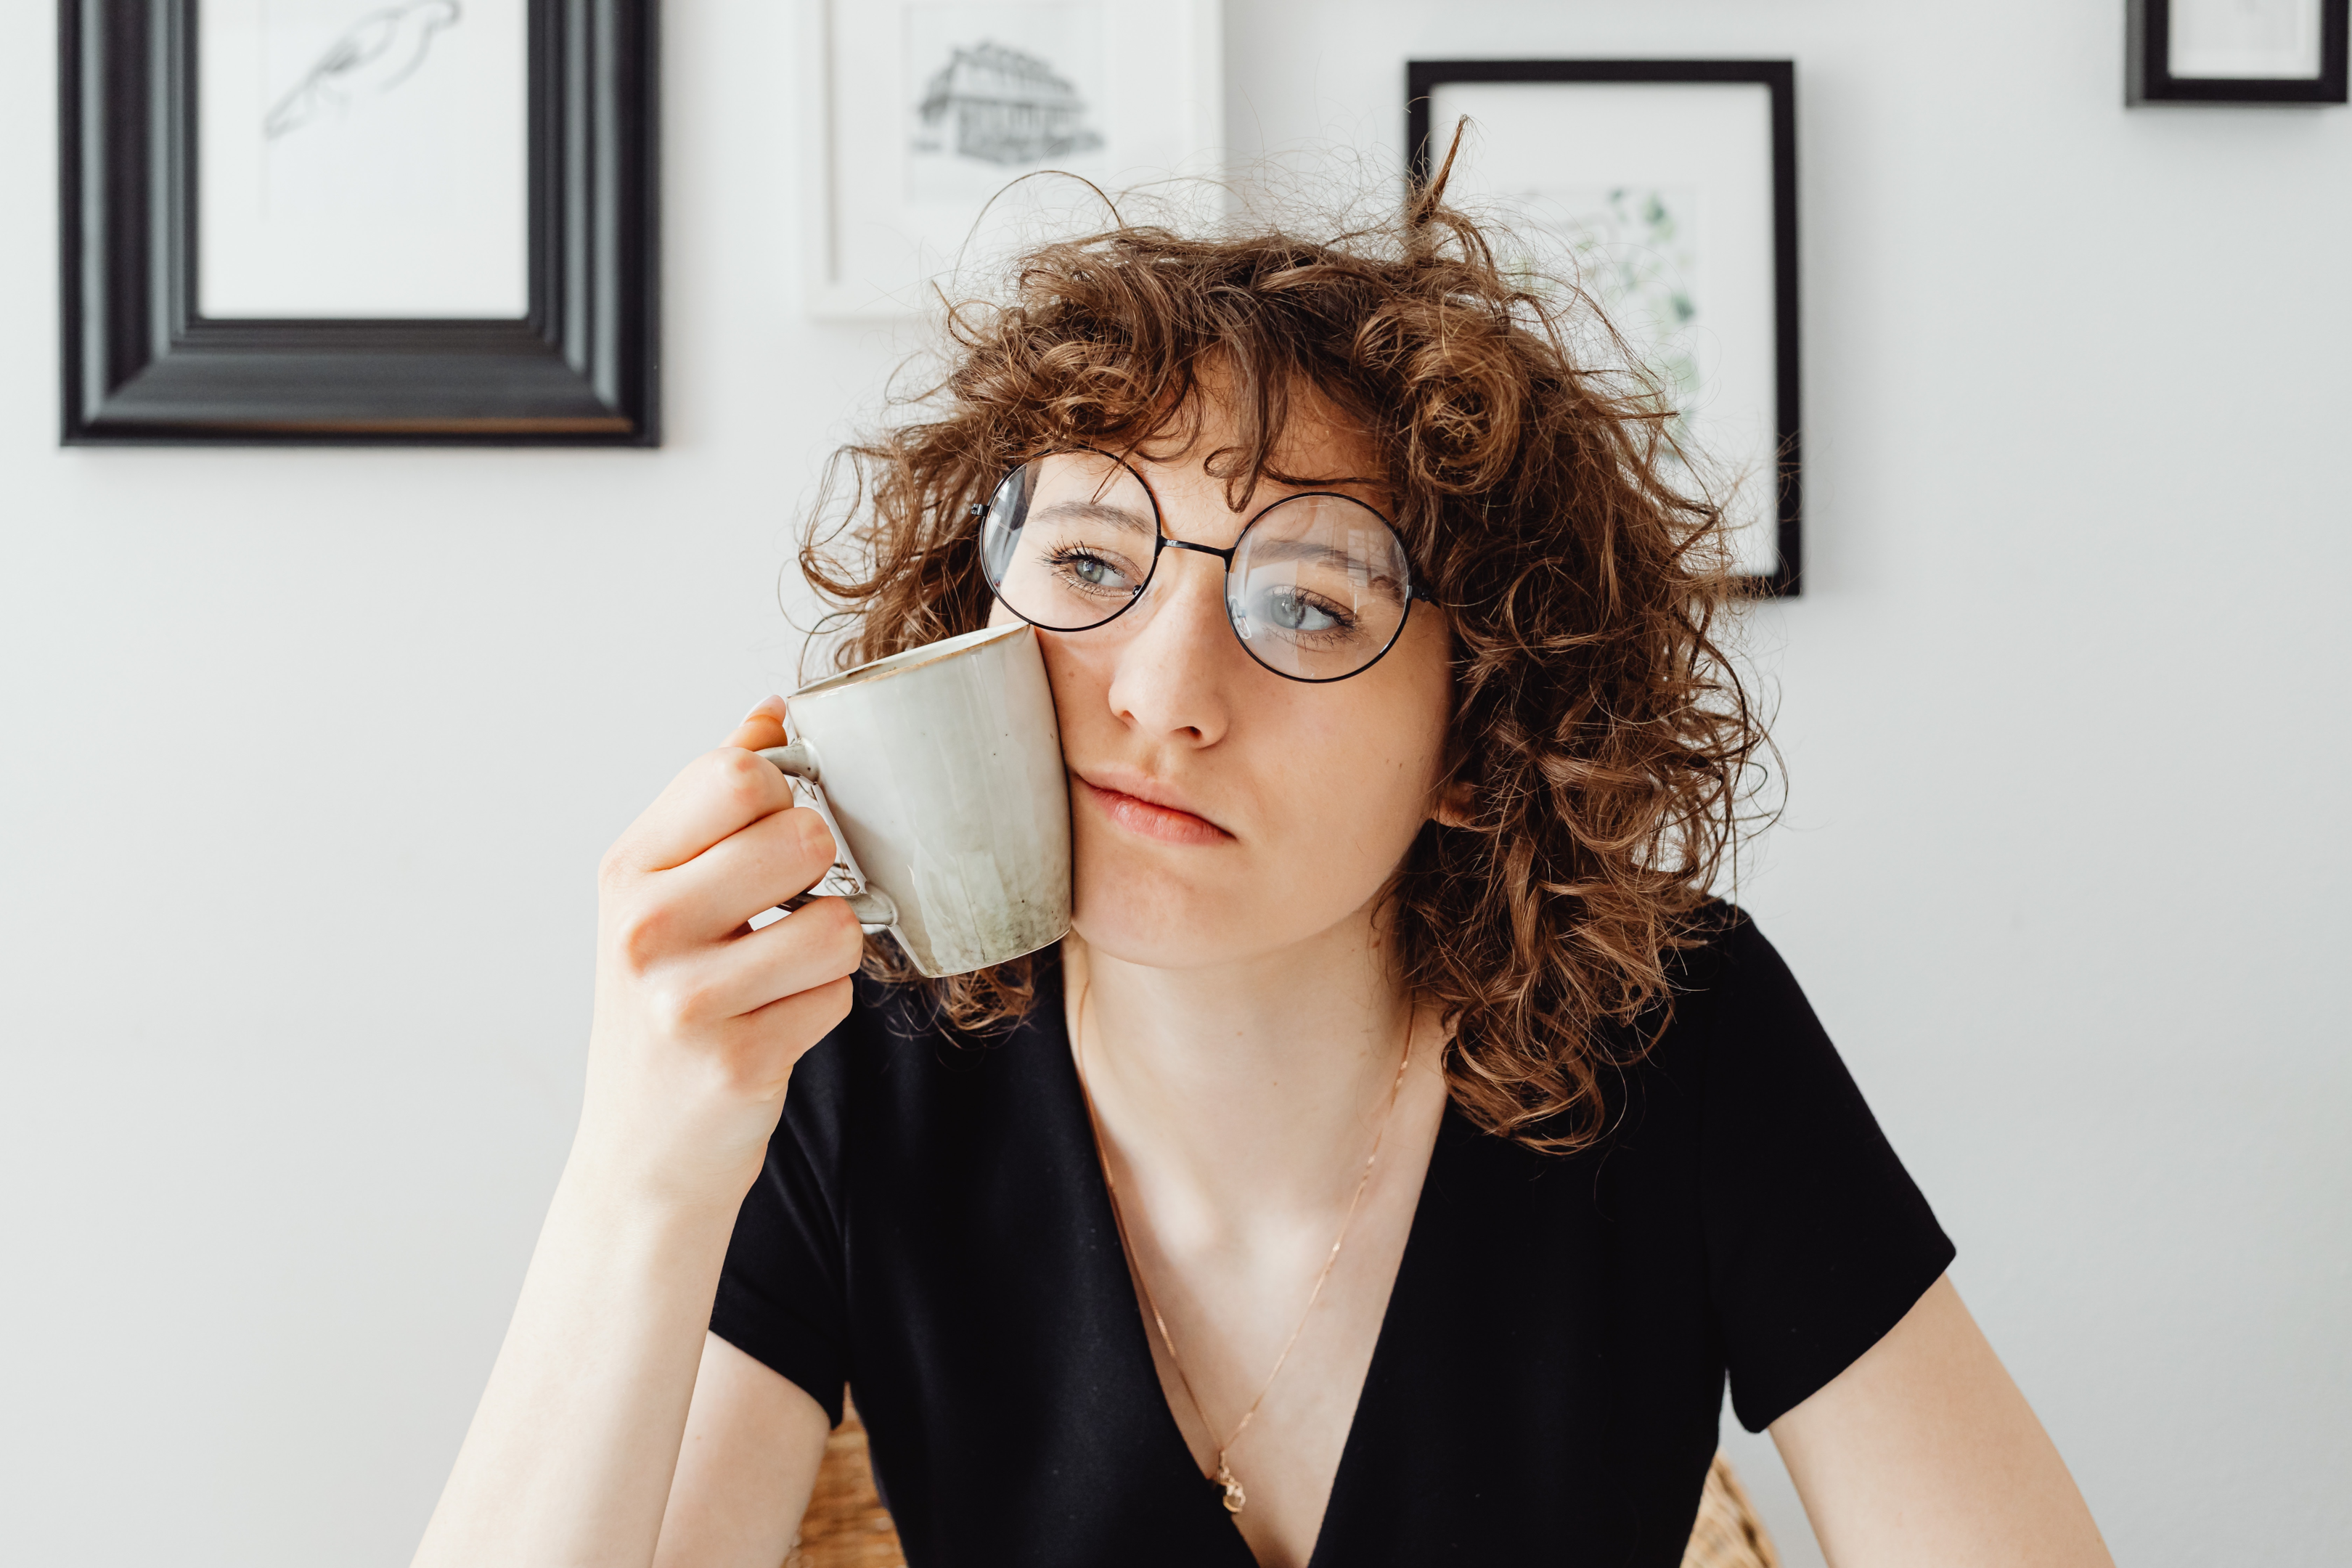 Woman thinking while holding a mug